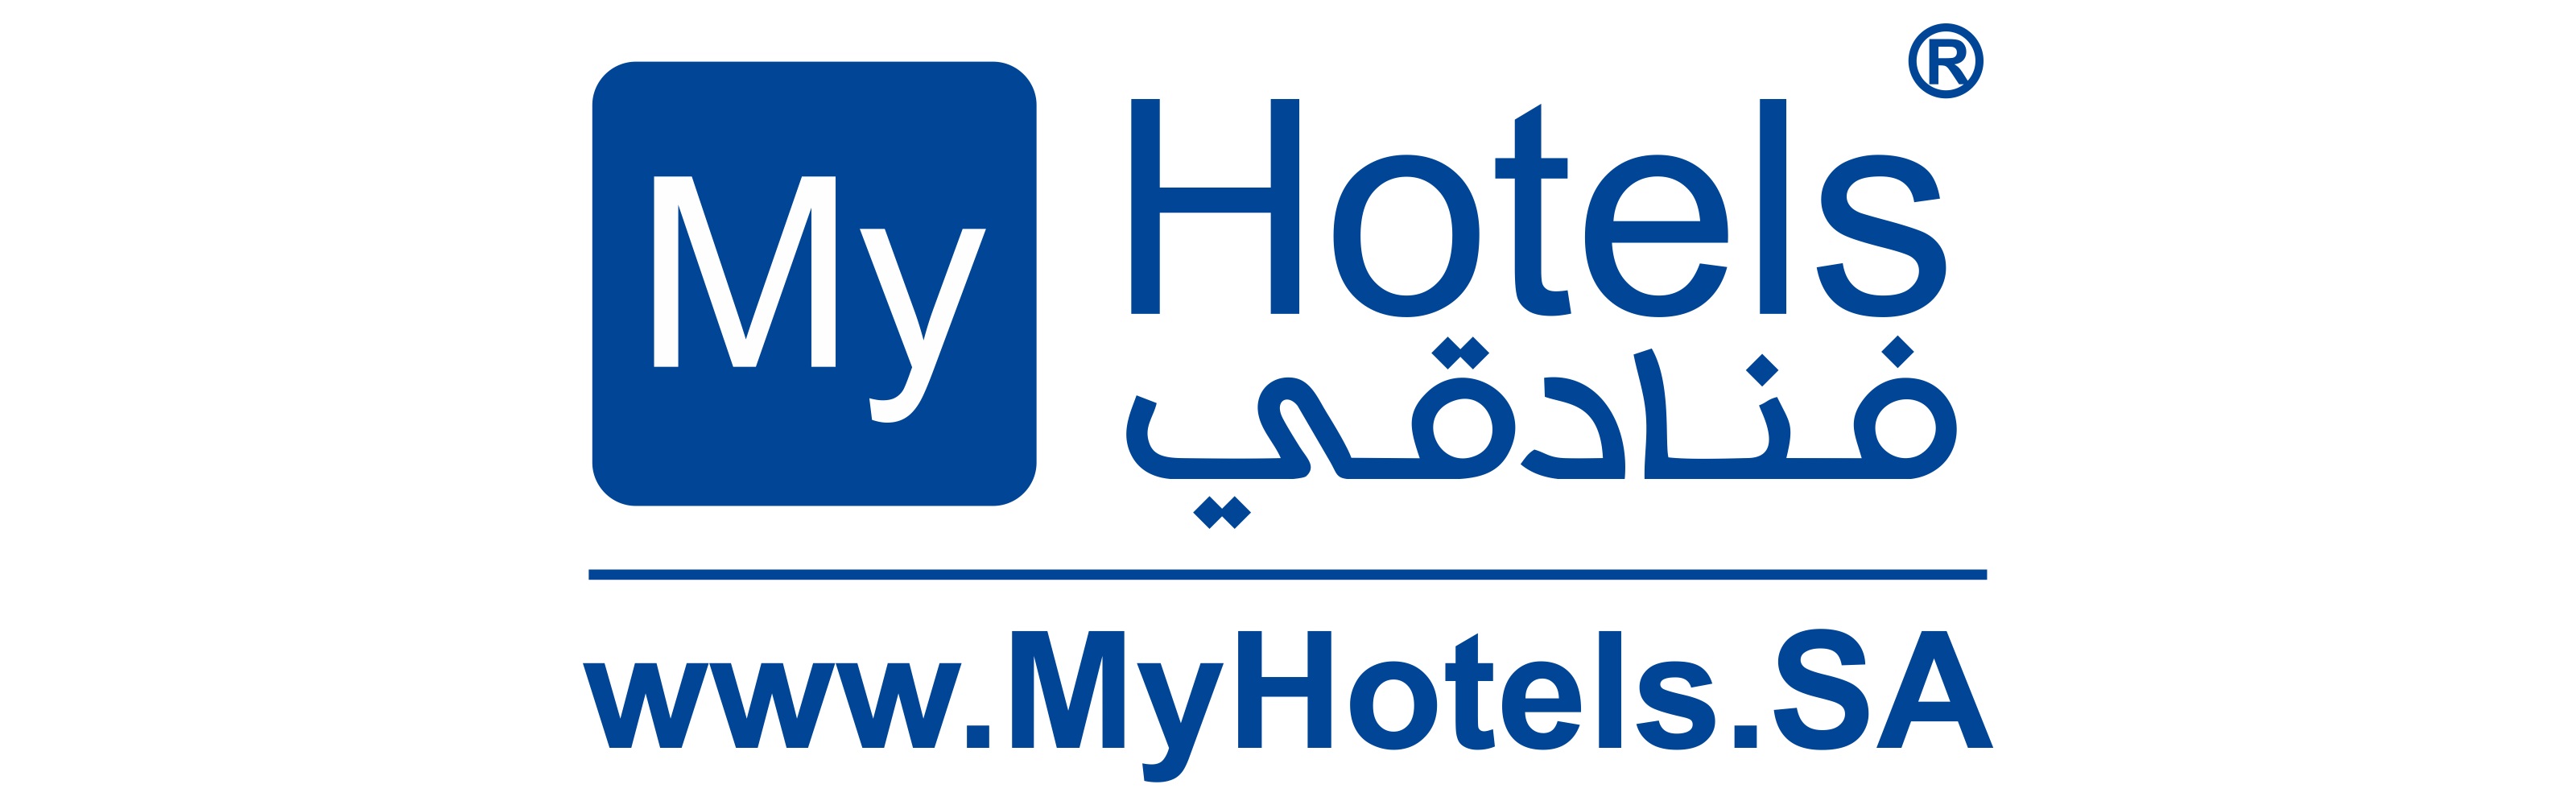 MyHotels Approved Umrah Online Travel Agency in Saudi Arabia
